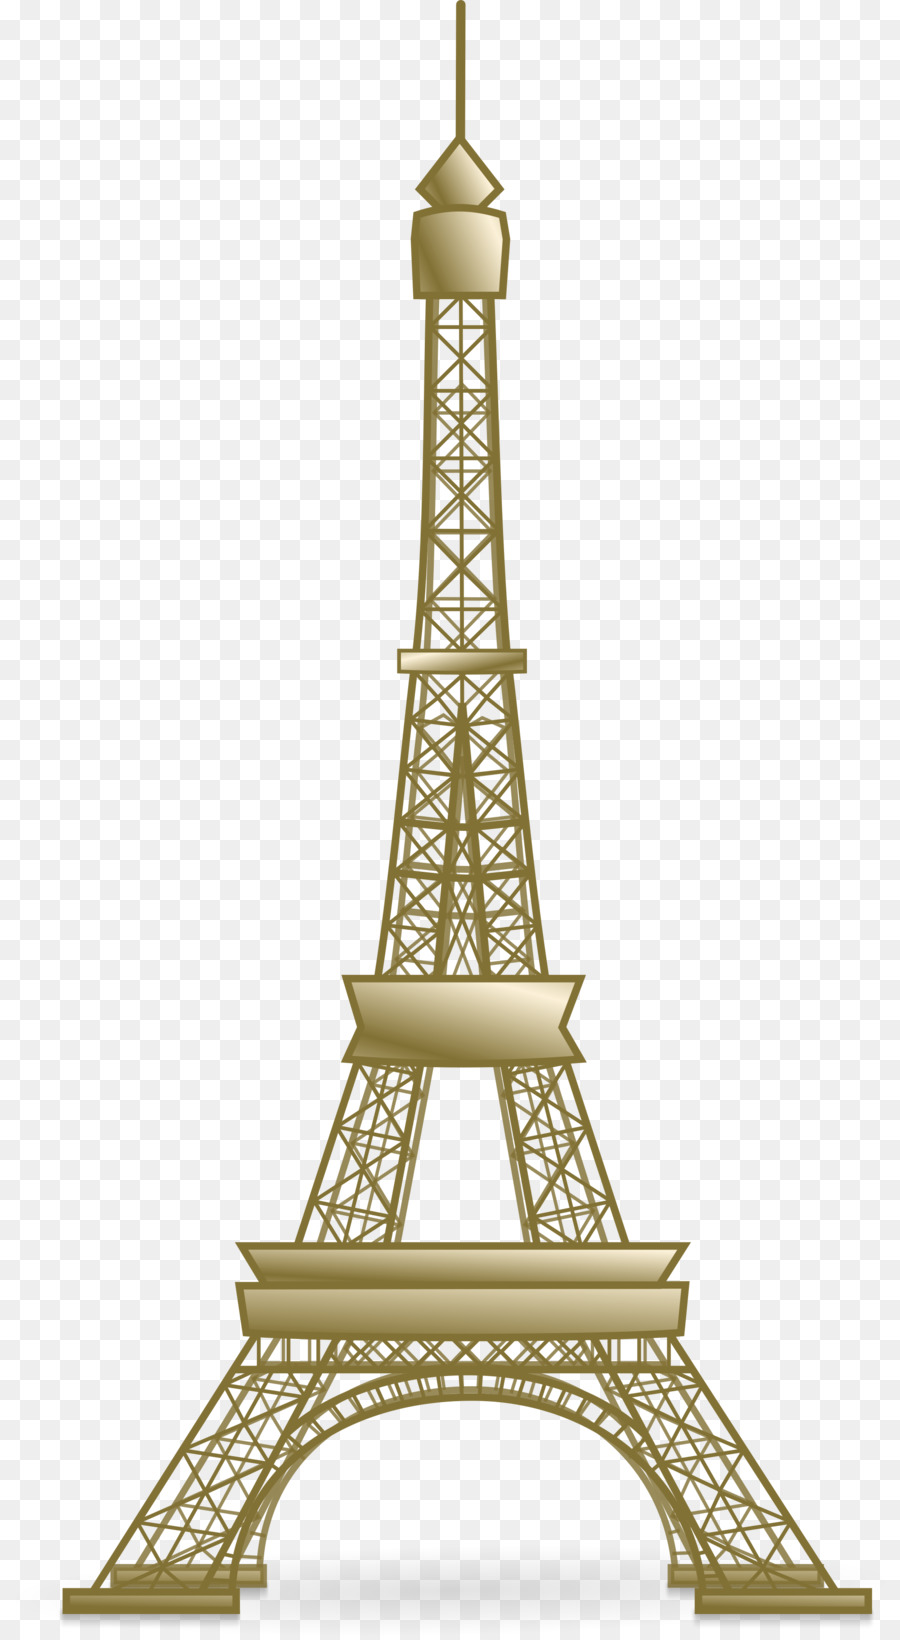 Eiffel Tower Clip art - Eiffel Tower Transparent PNG png download - 2000*3637 - Free Transparent Eiffel Tower png Download.